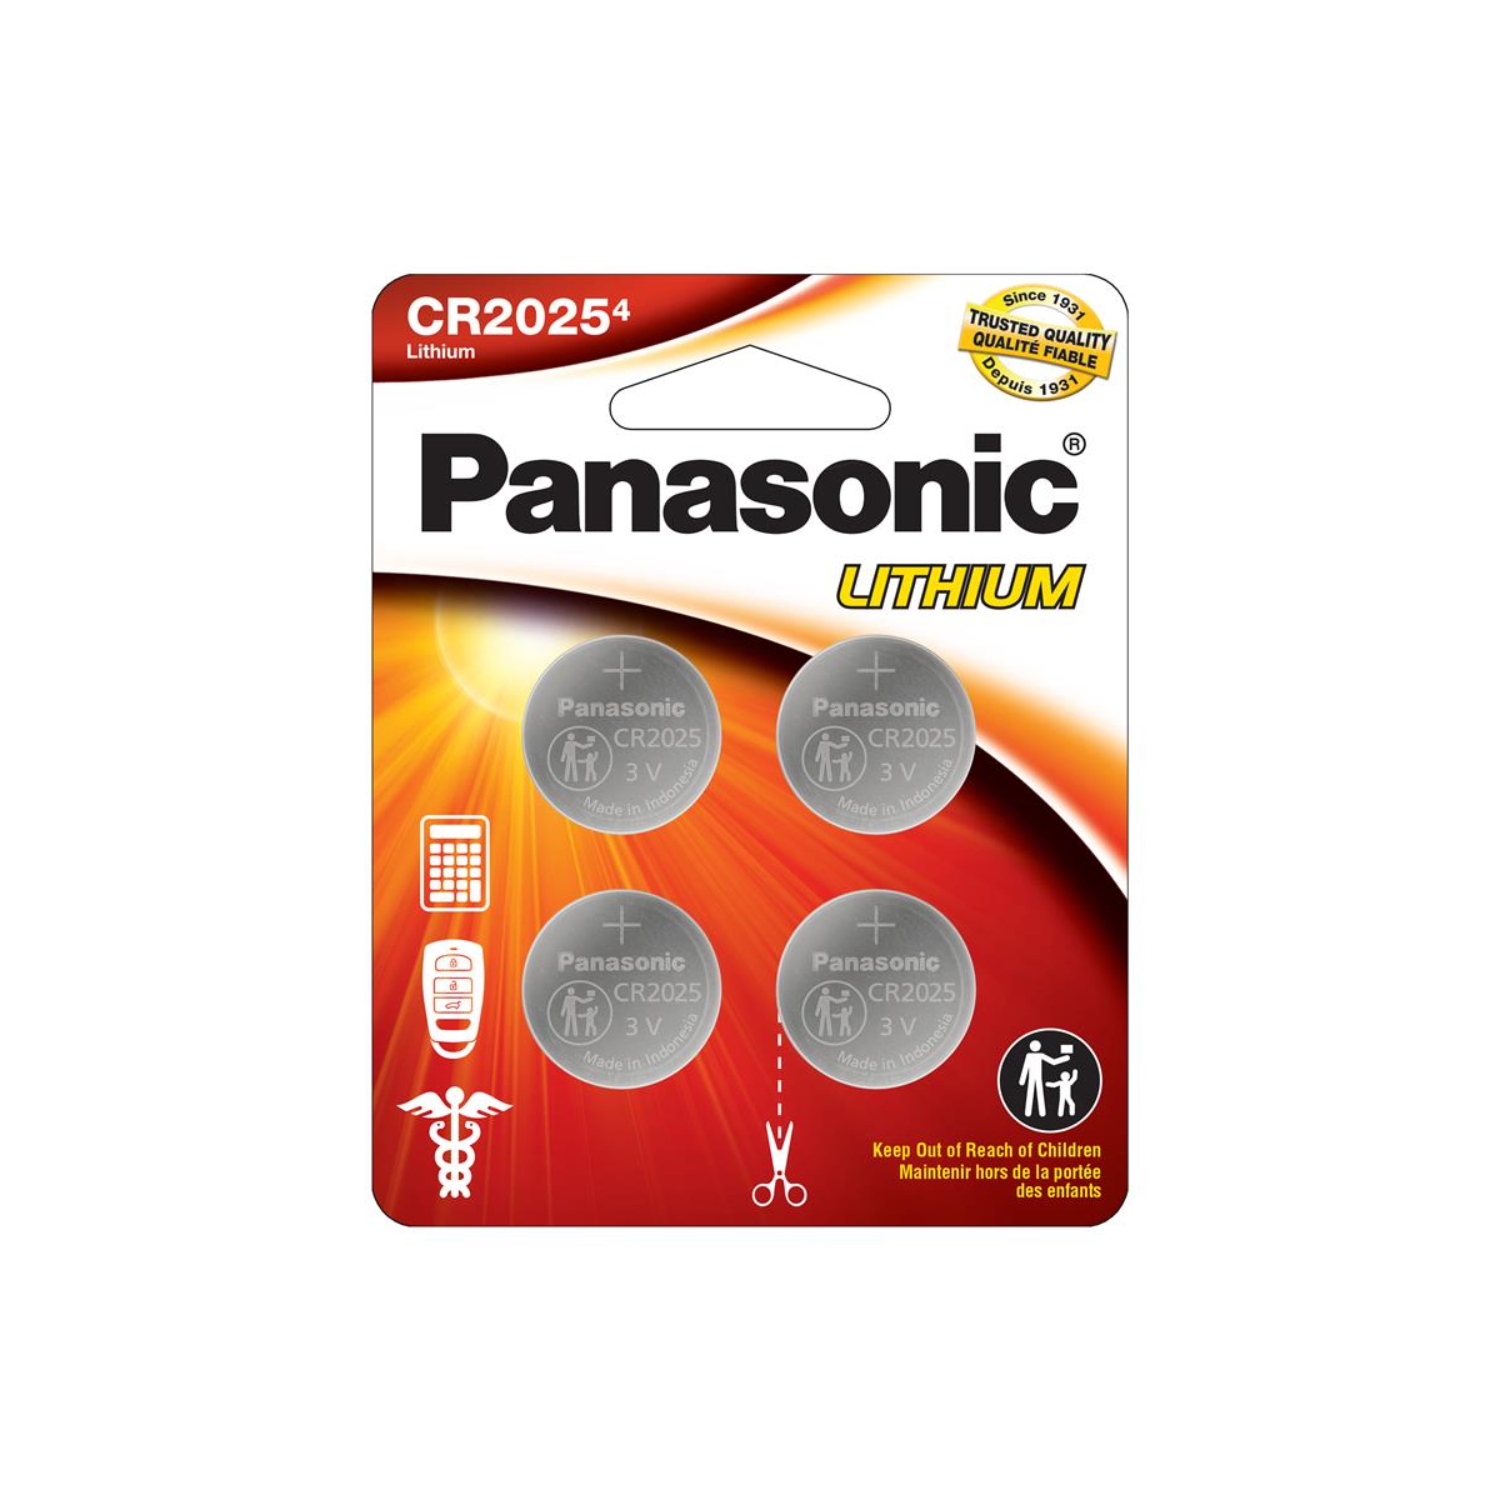 Panasonic 2025 3V Lithium Coin Cell Battery 4 Pack